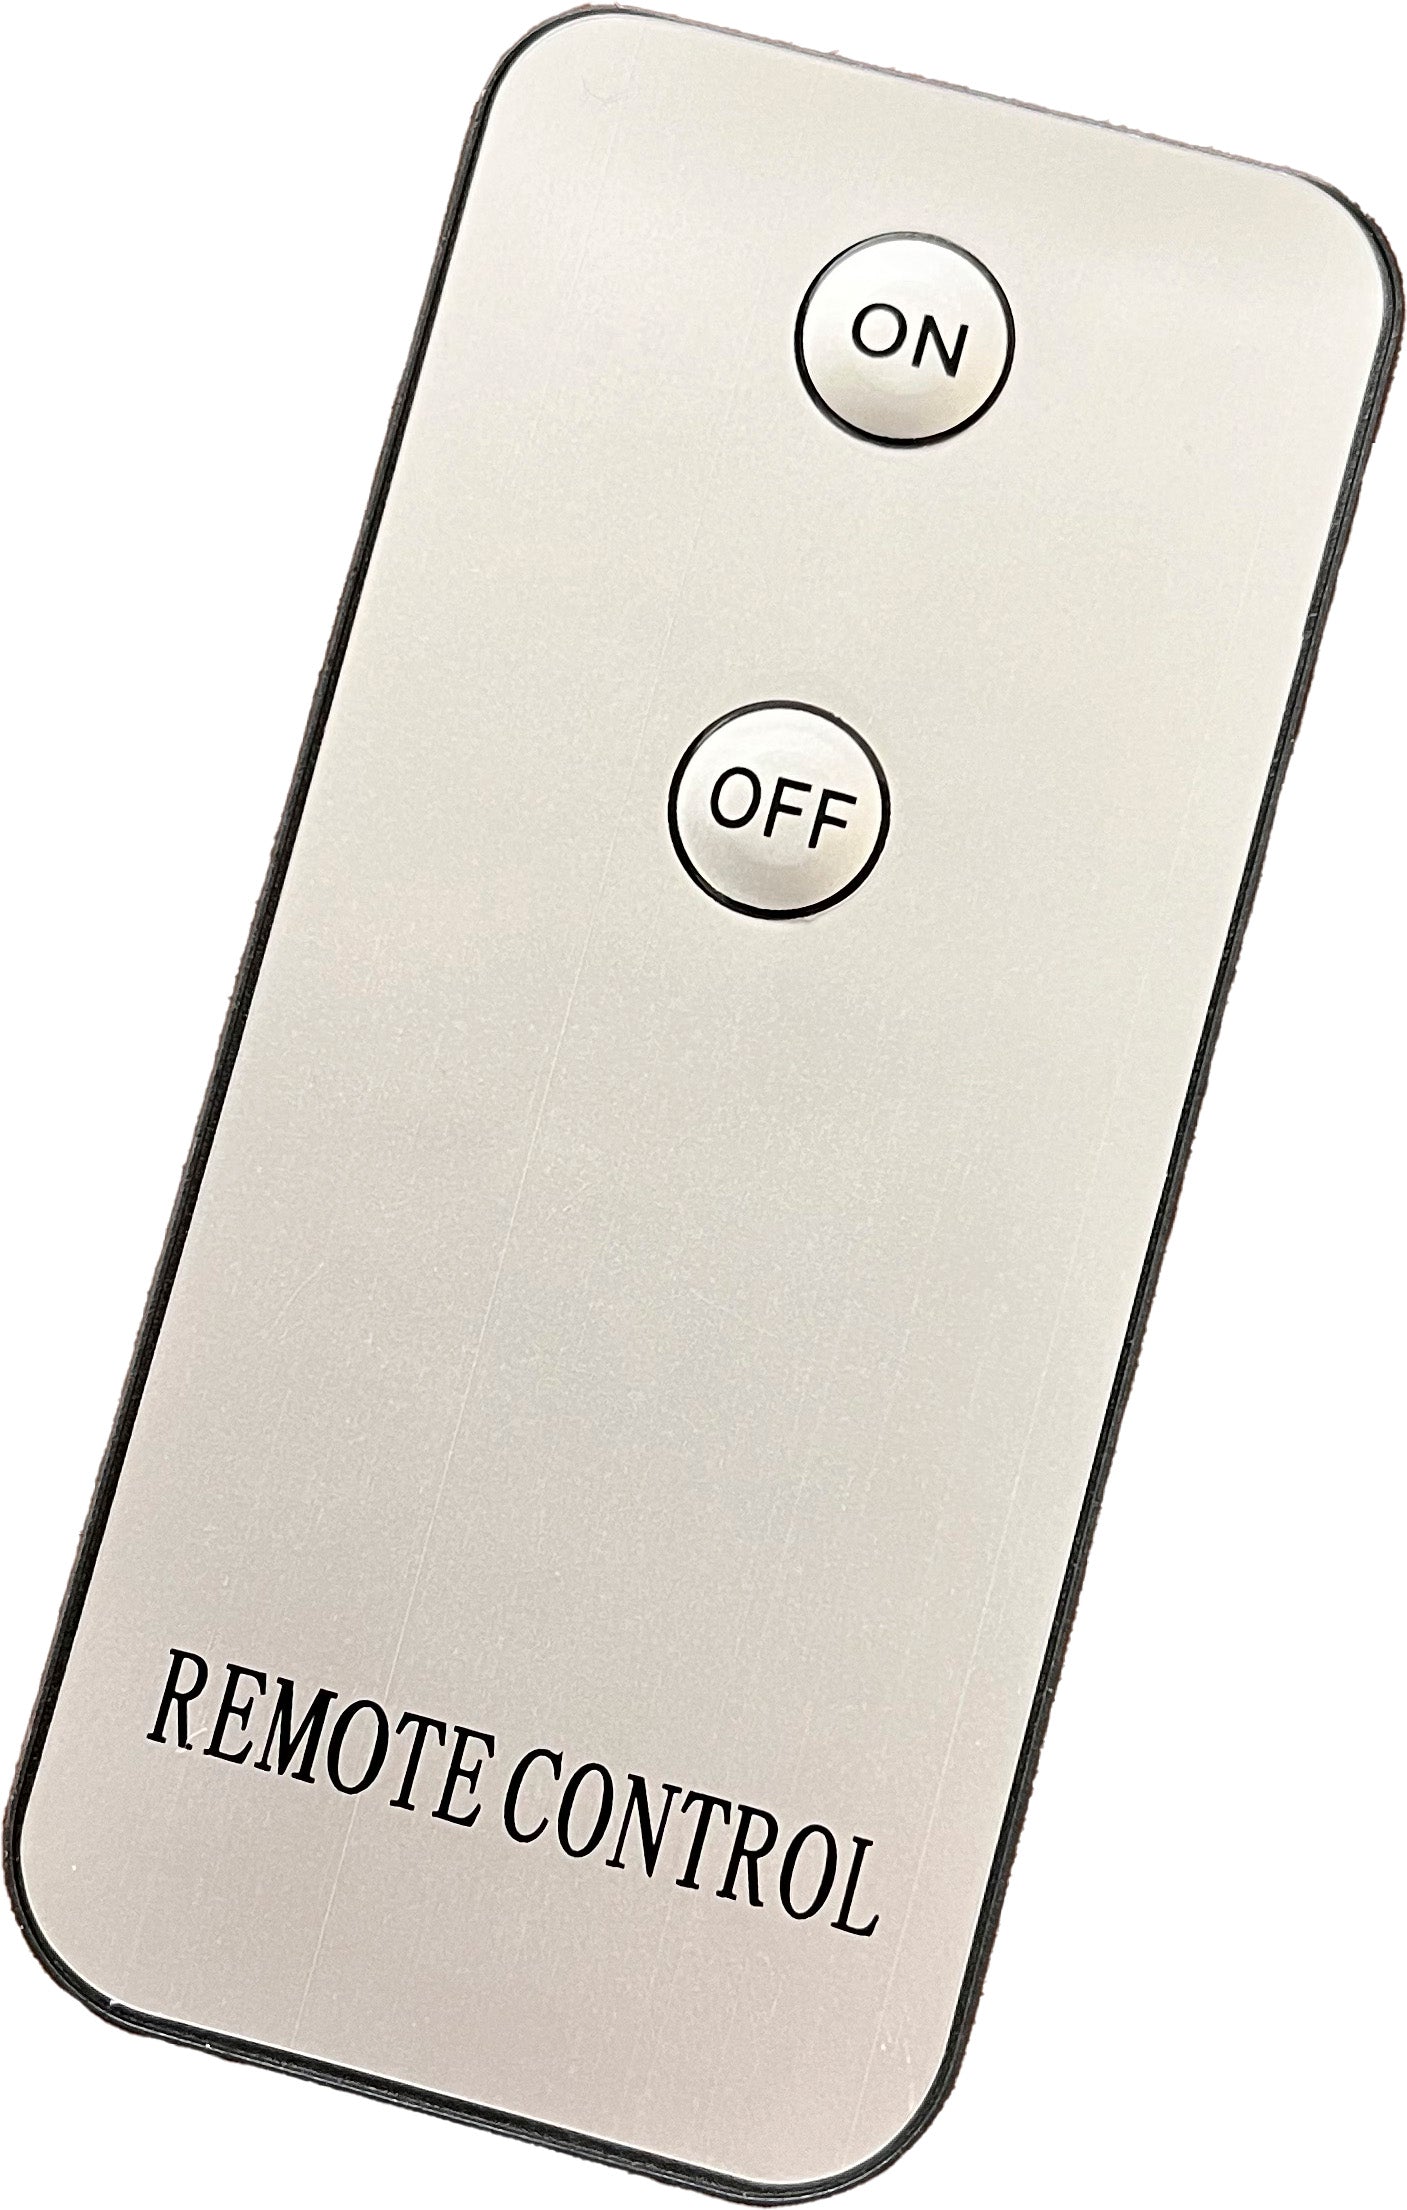 Remote - Generation 1